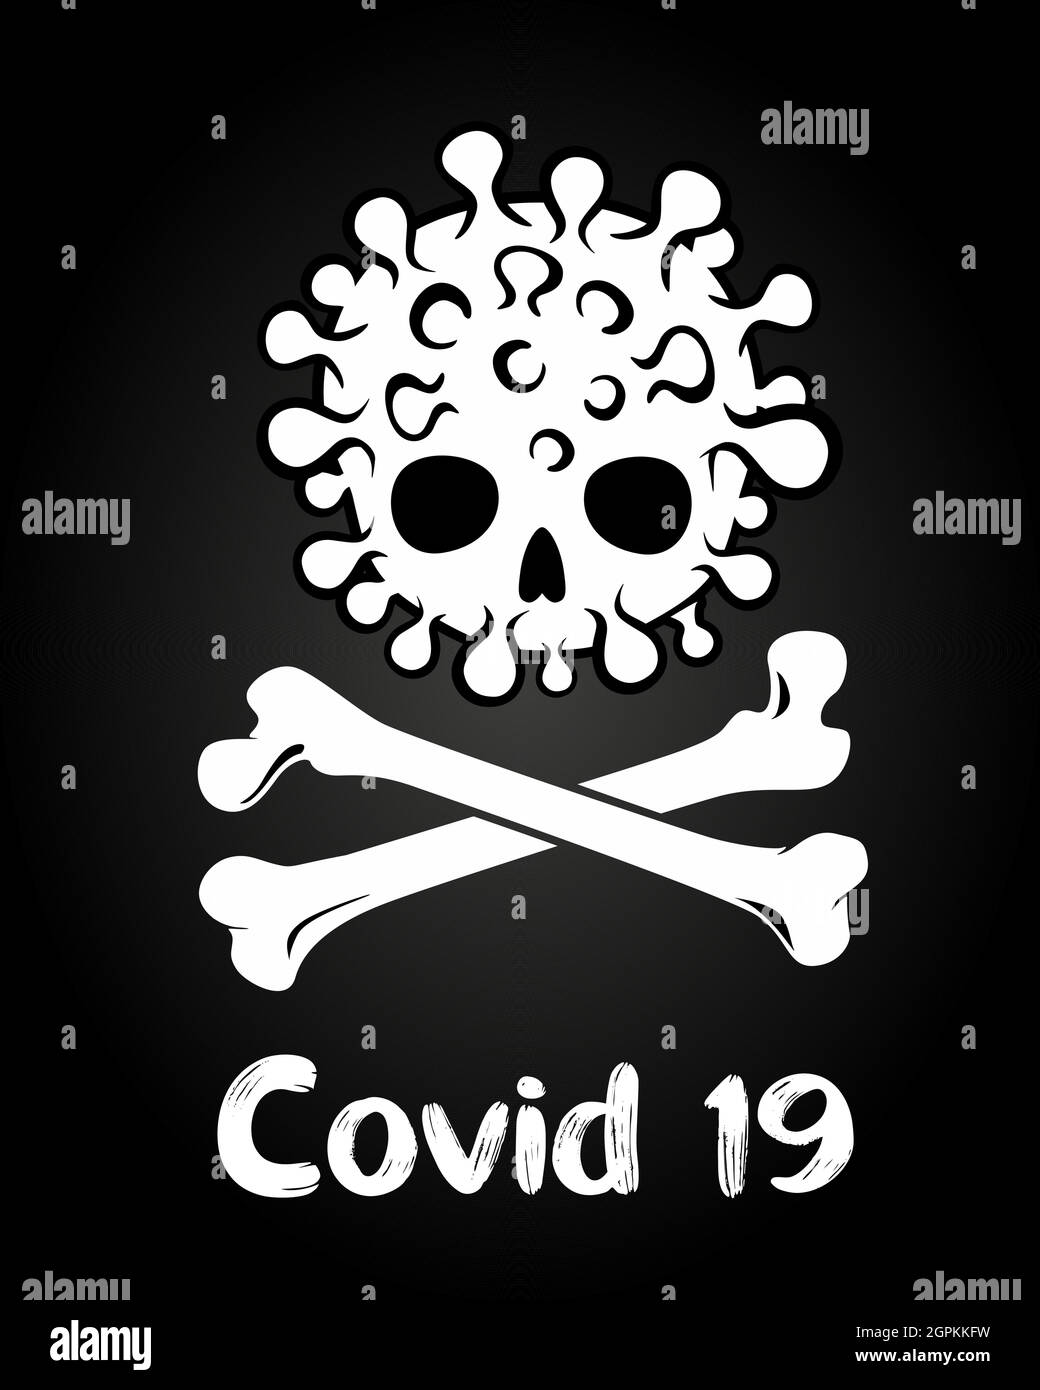 Coronavirus virus infection pirate sign. COVID-19 - virus - human white skull and bones sketch. Sign symbol. Black background Isolated vector illustration. Stock Vector